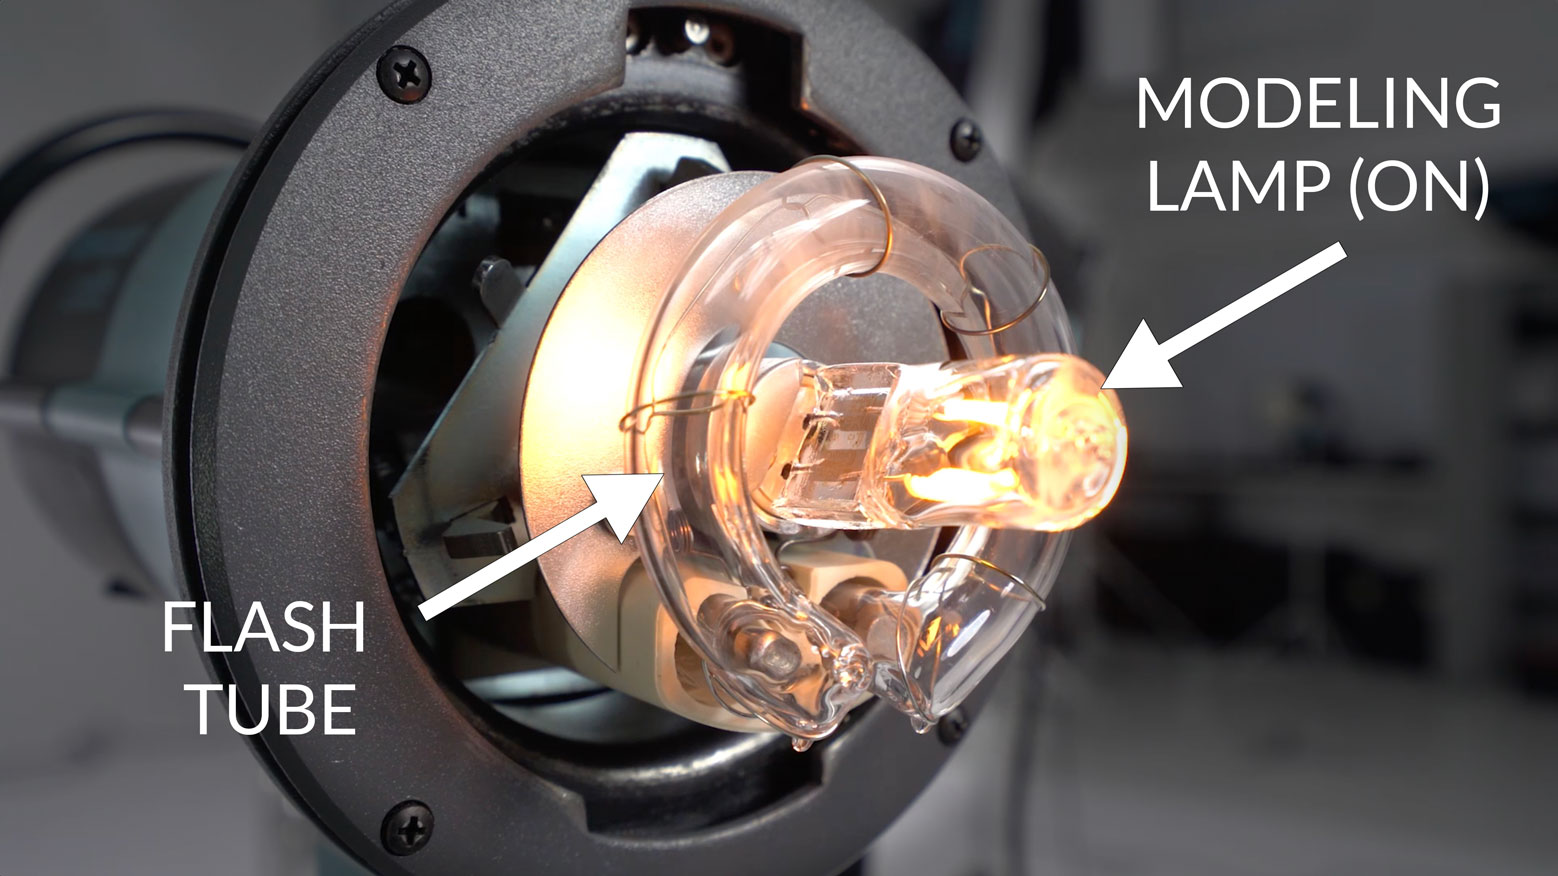 Modeling lamp vs flash